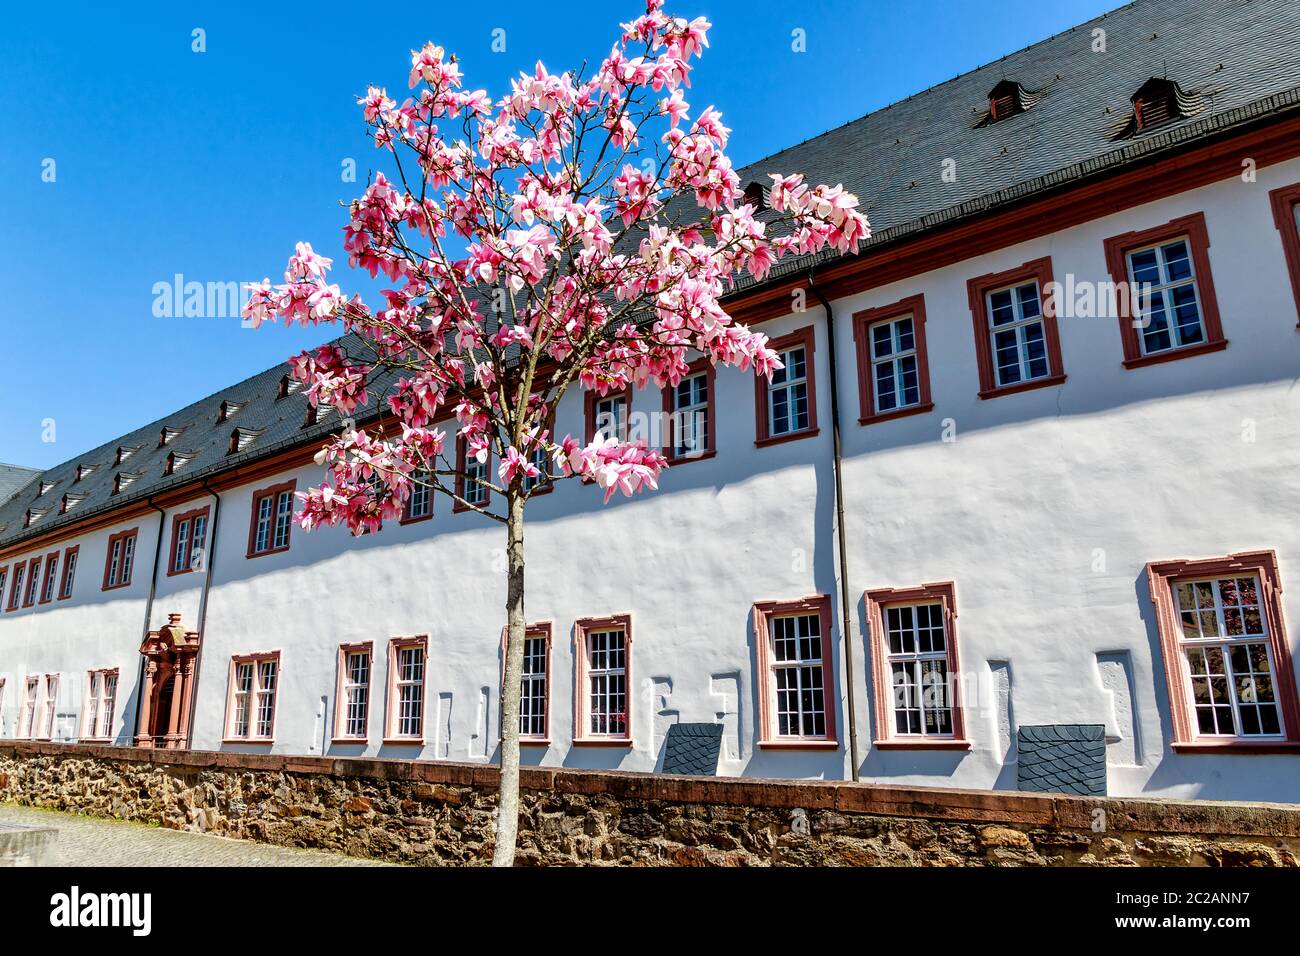 Kloster Eberbach, near Eltville am Rhein - Mystic heritage of the Cistercian monks in Rheingau, Hesse, Germany Stock Photo